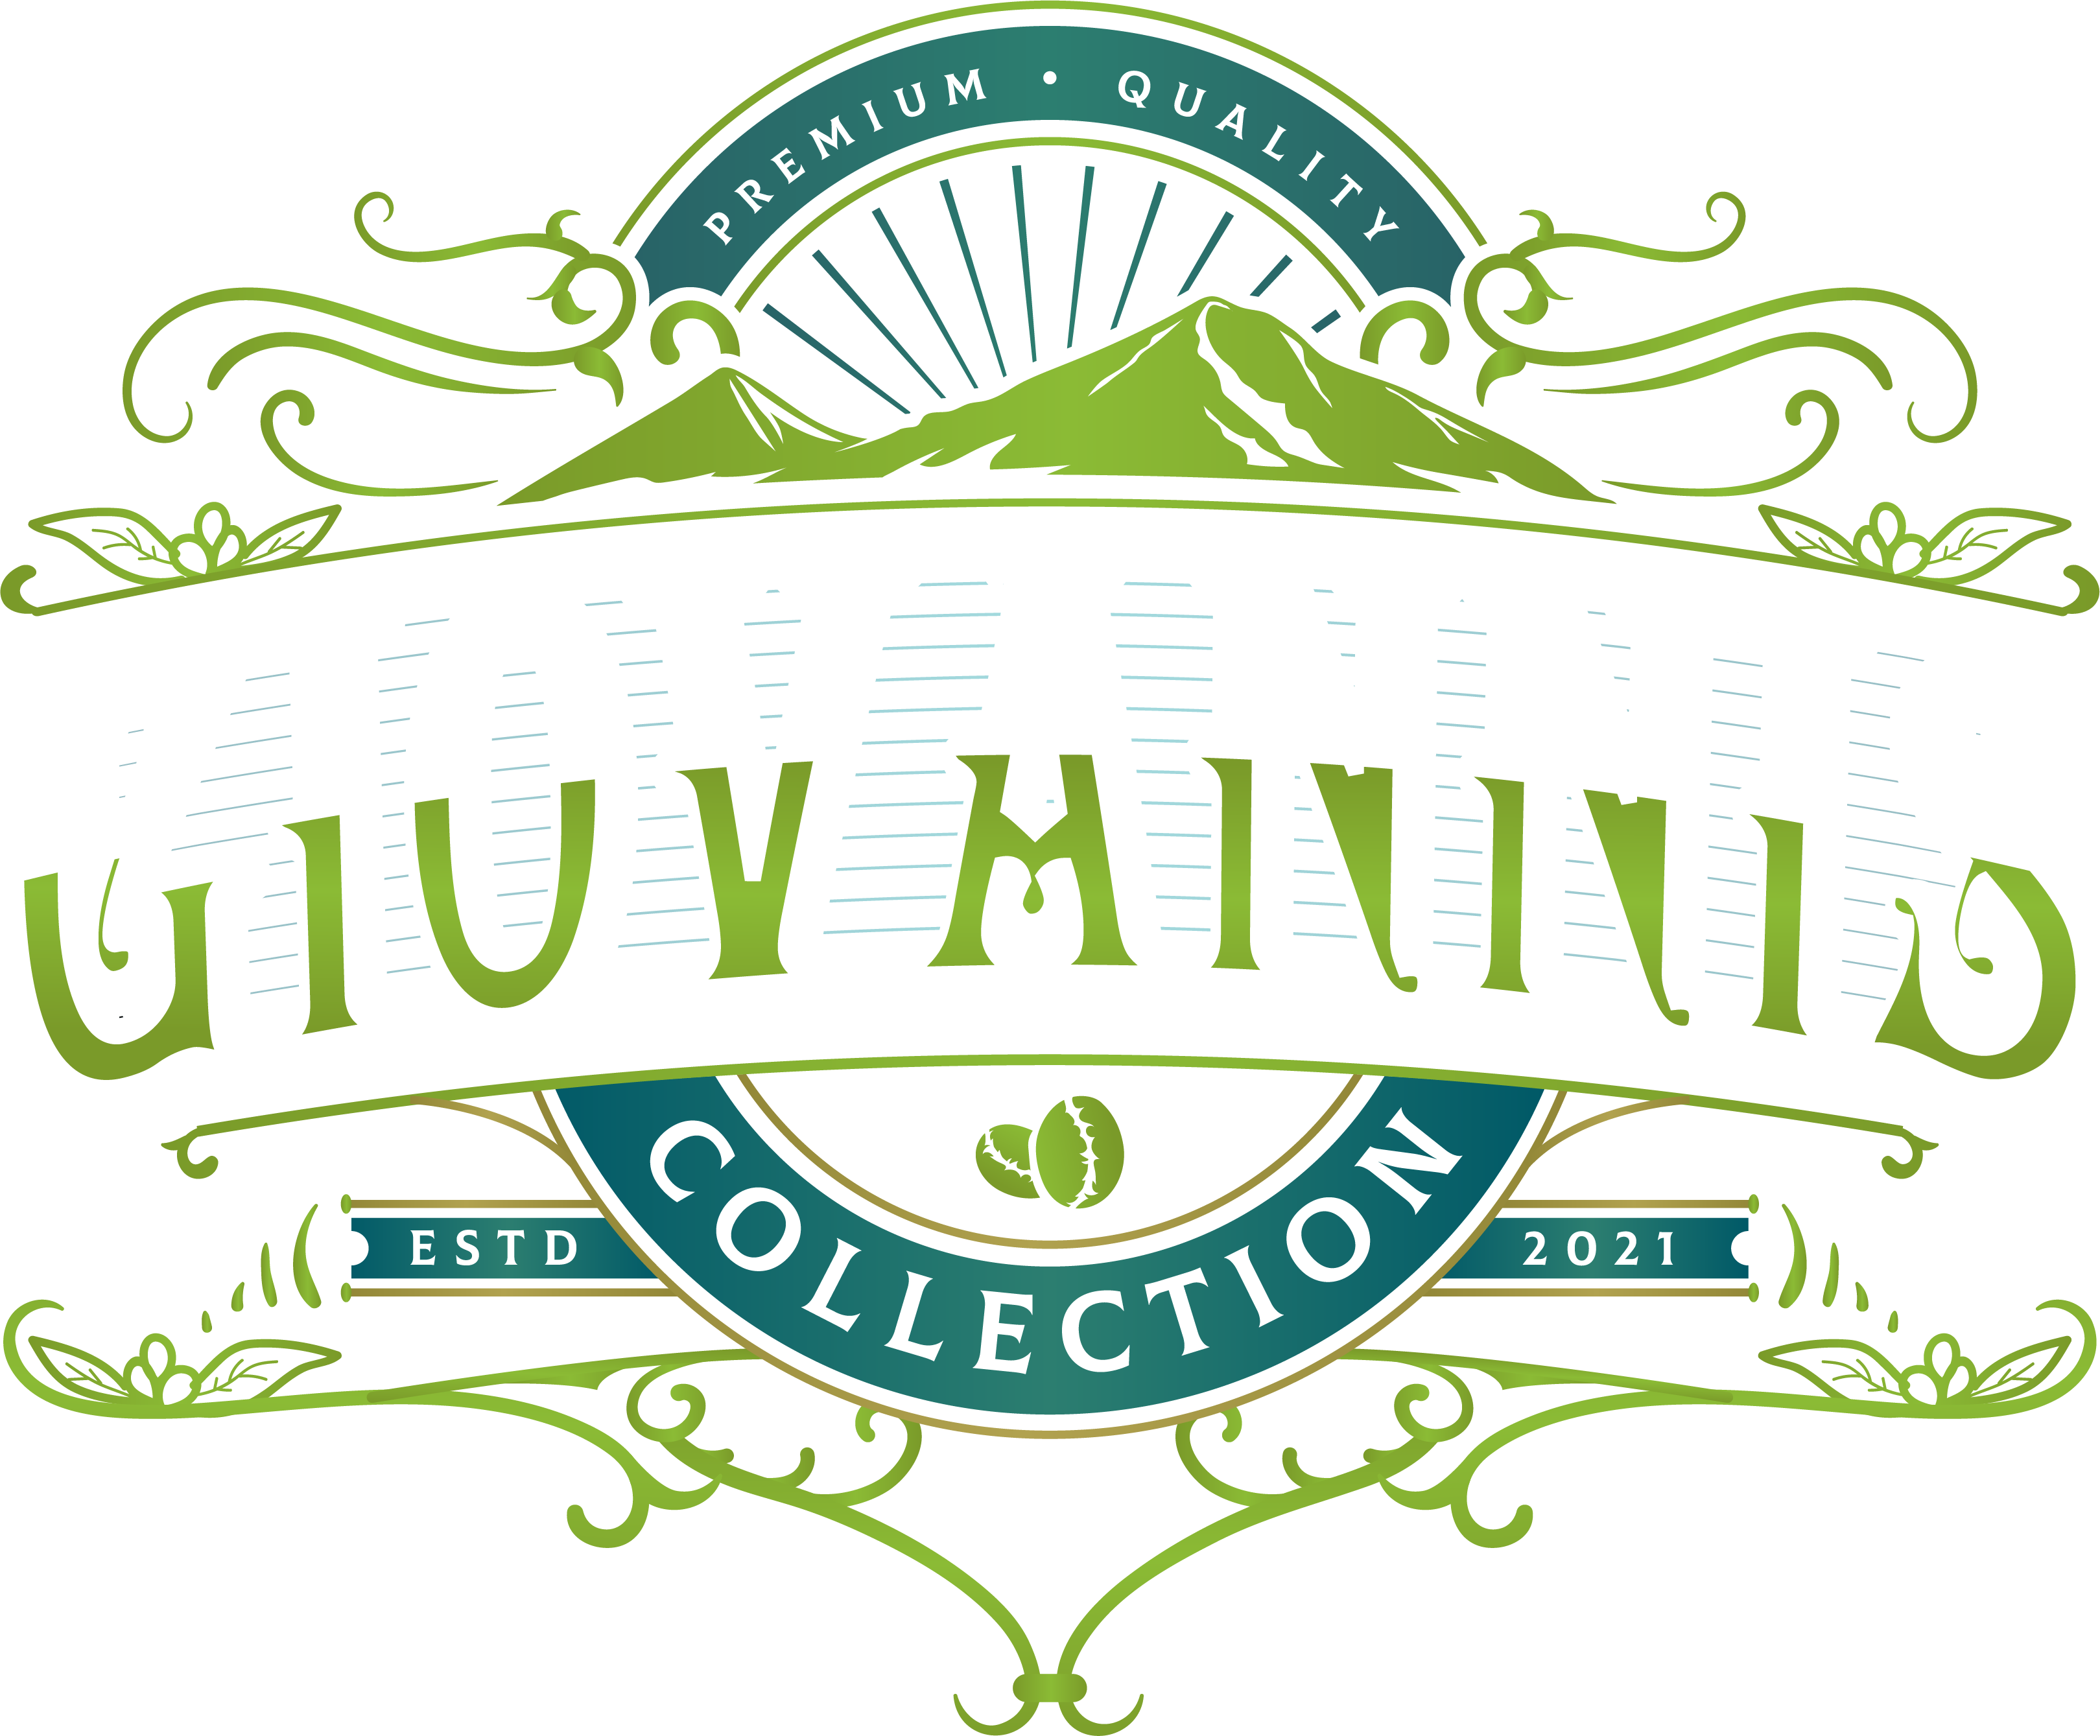 Giovanni's Collection Logo